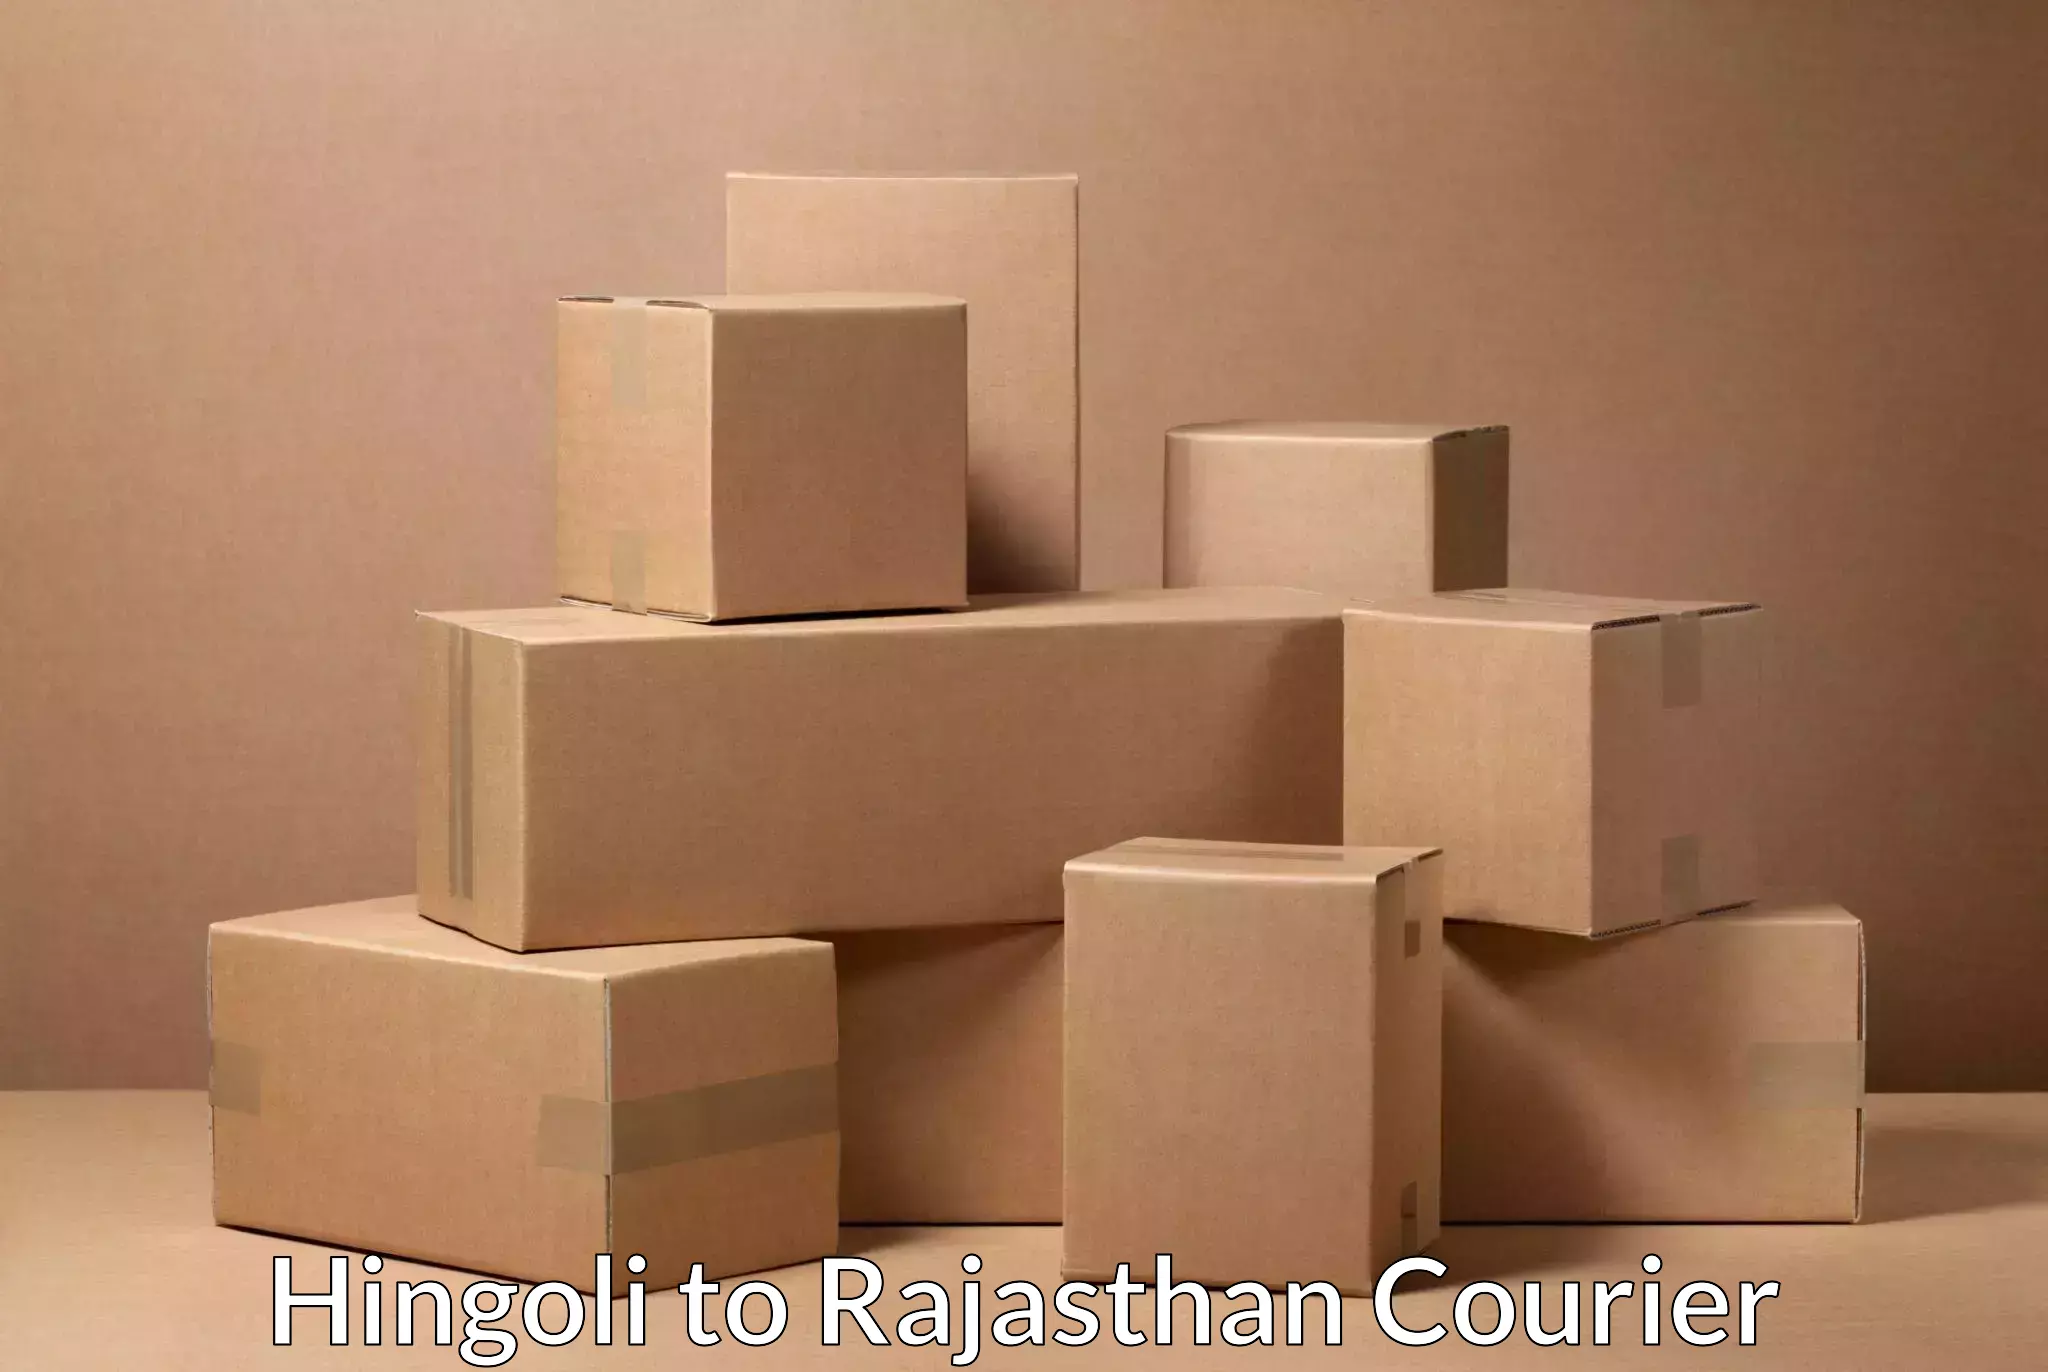 Efficient order fulfillment Hingoli to Jodhpur